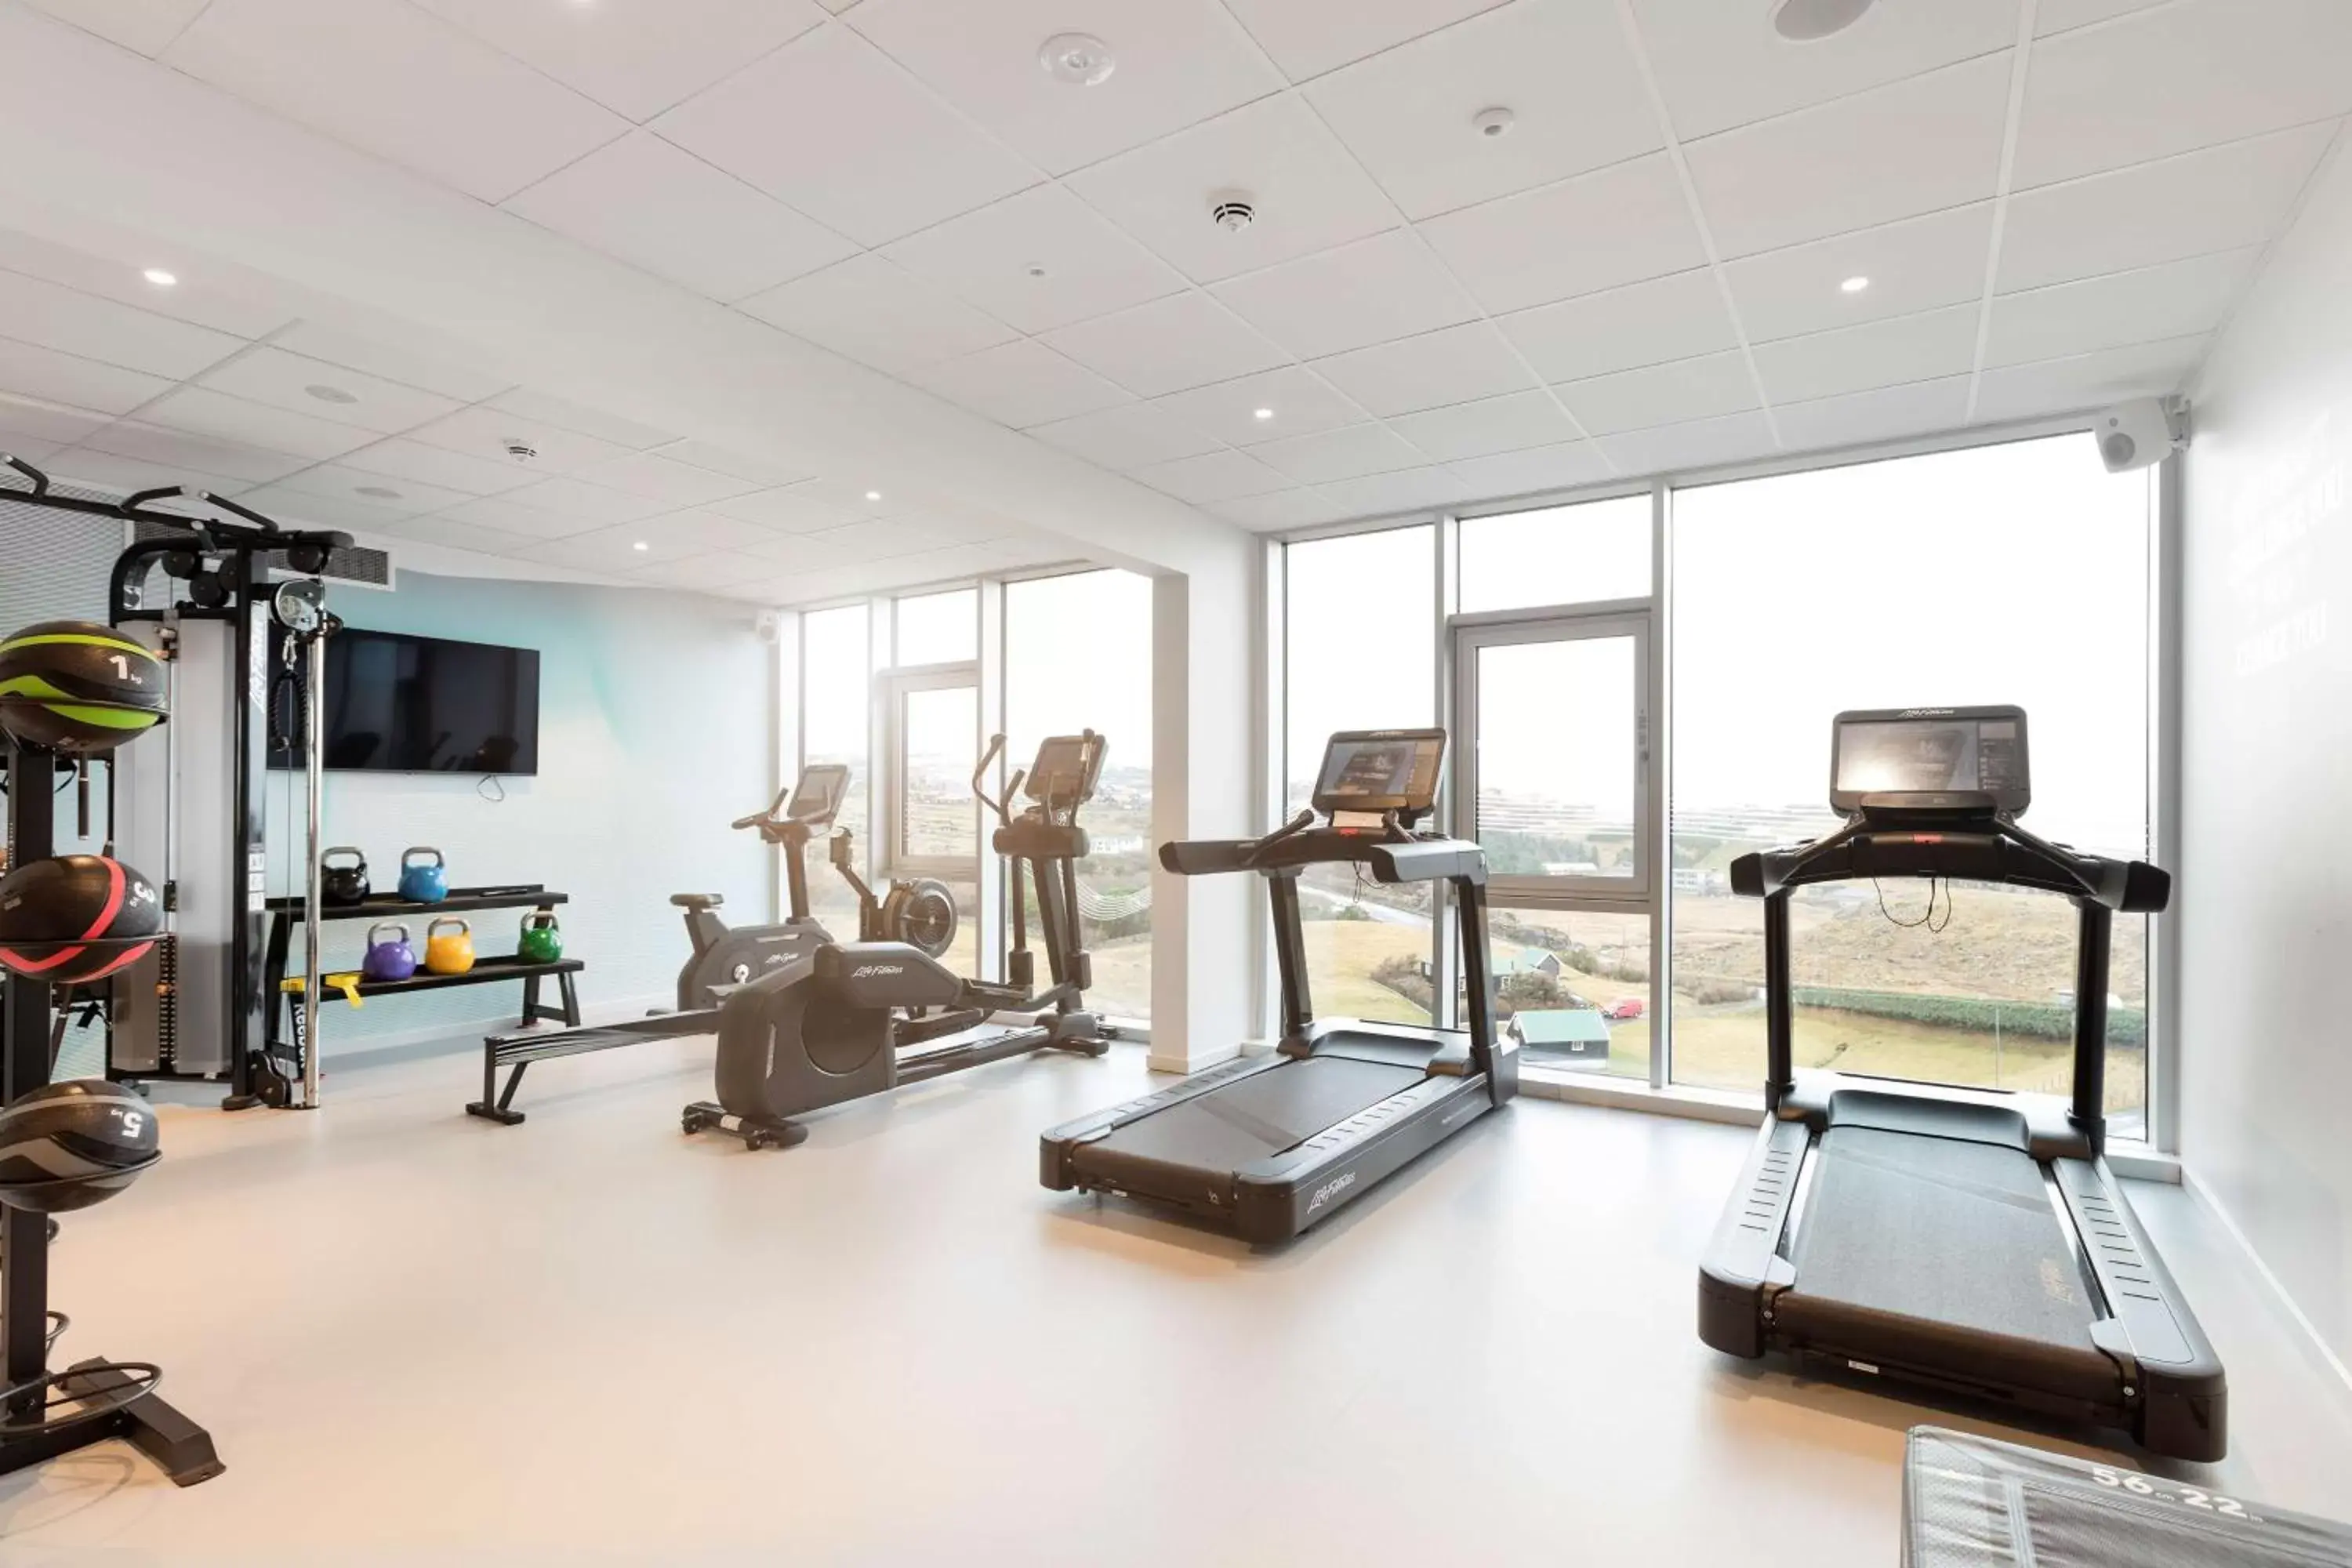 Fitness centre/facilities, Fitness Center/Facilities in Hilton Garden Inn Faroe Islands